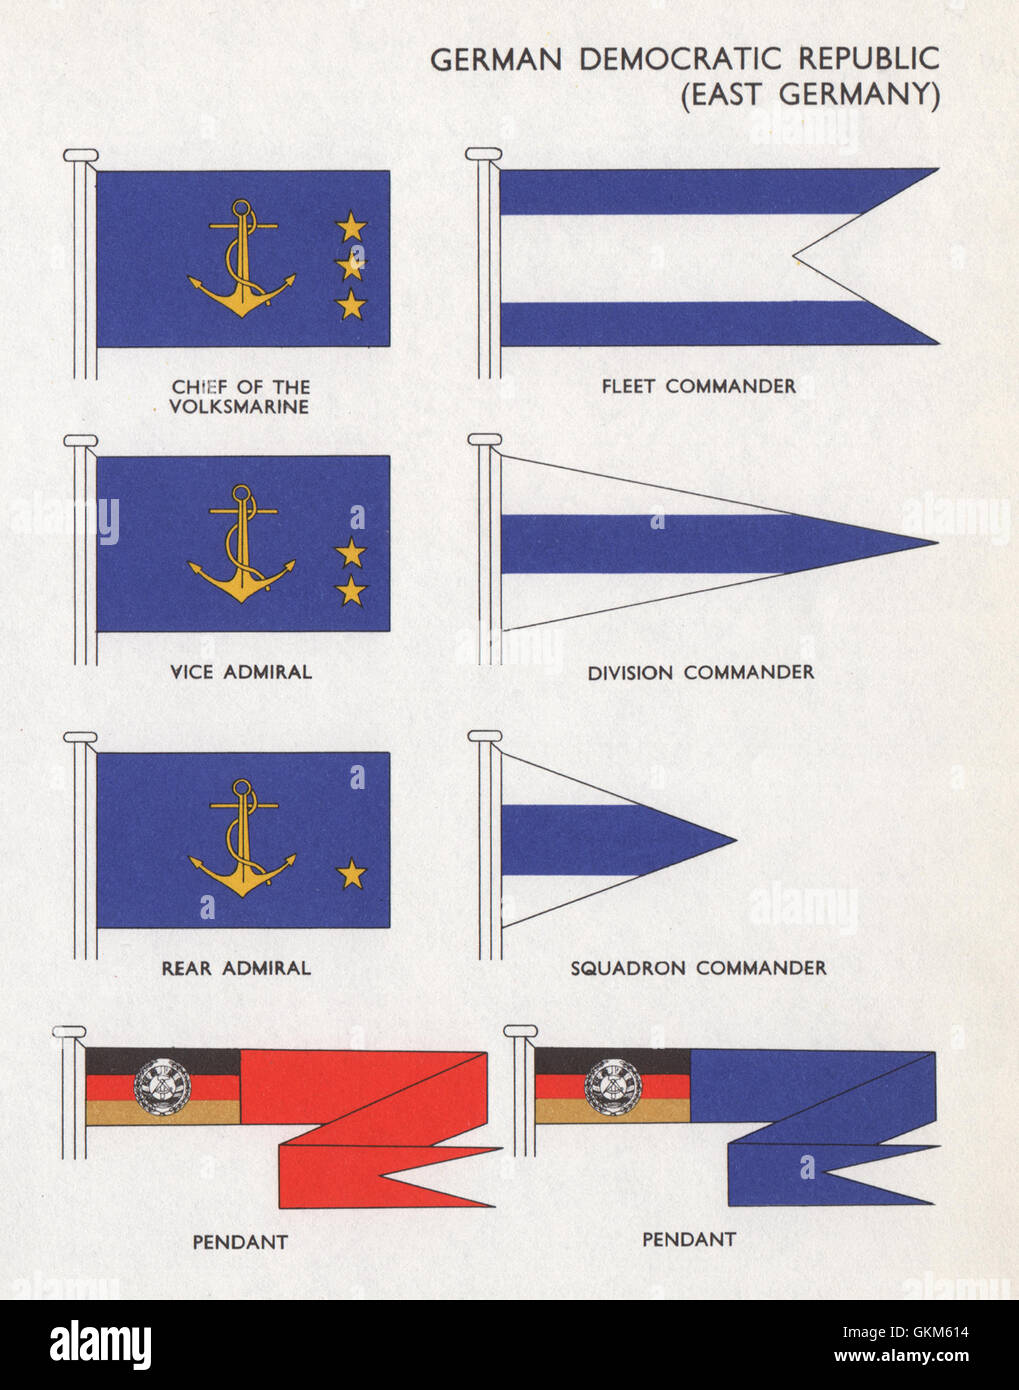 GDR/EAST GERMANY FLAGS Volksmarine chief Fleet Commander Admiral Pendant, 1958 Stock Photo